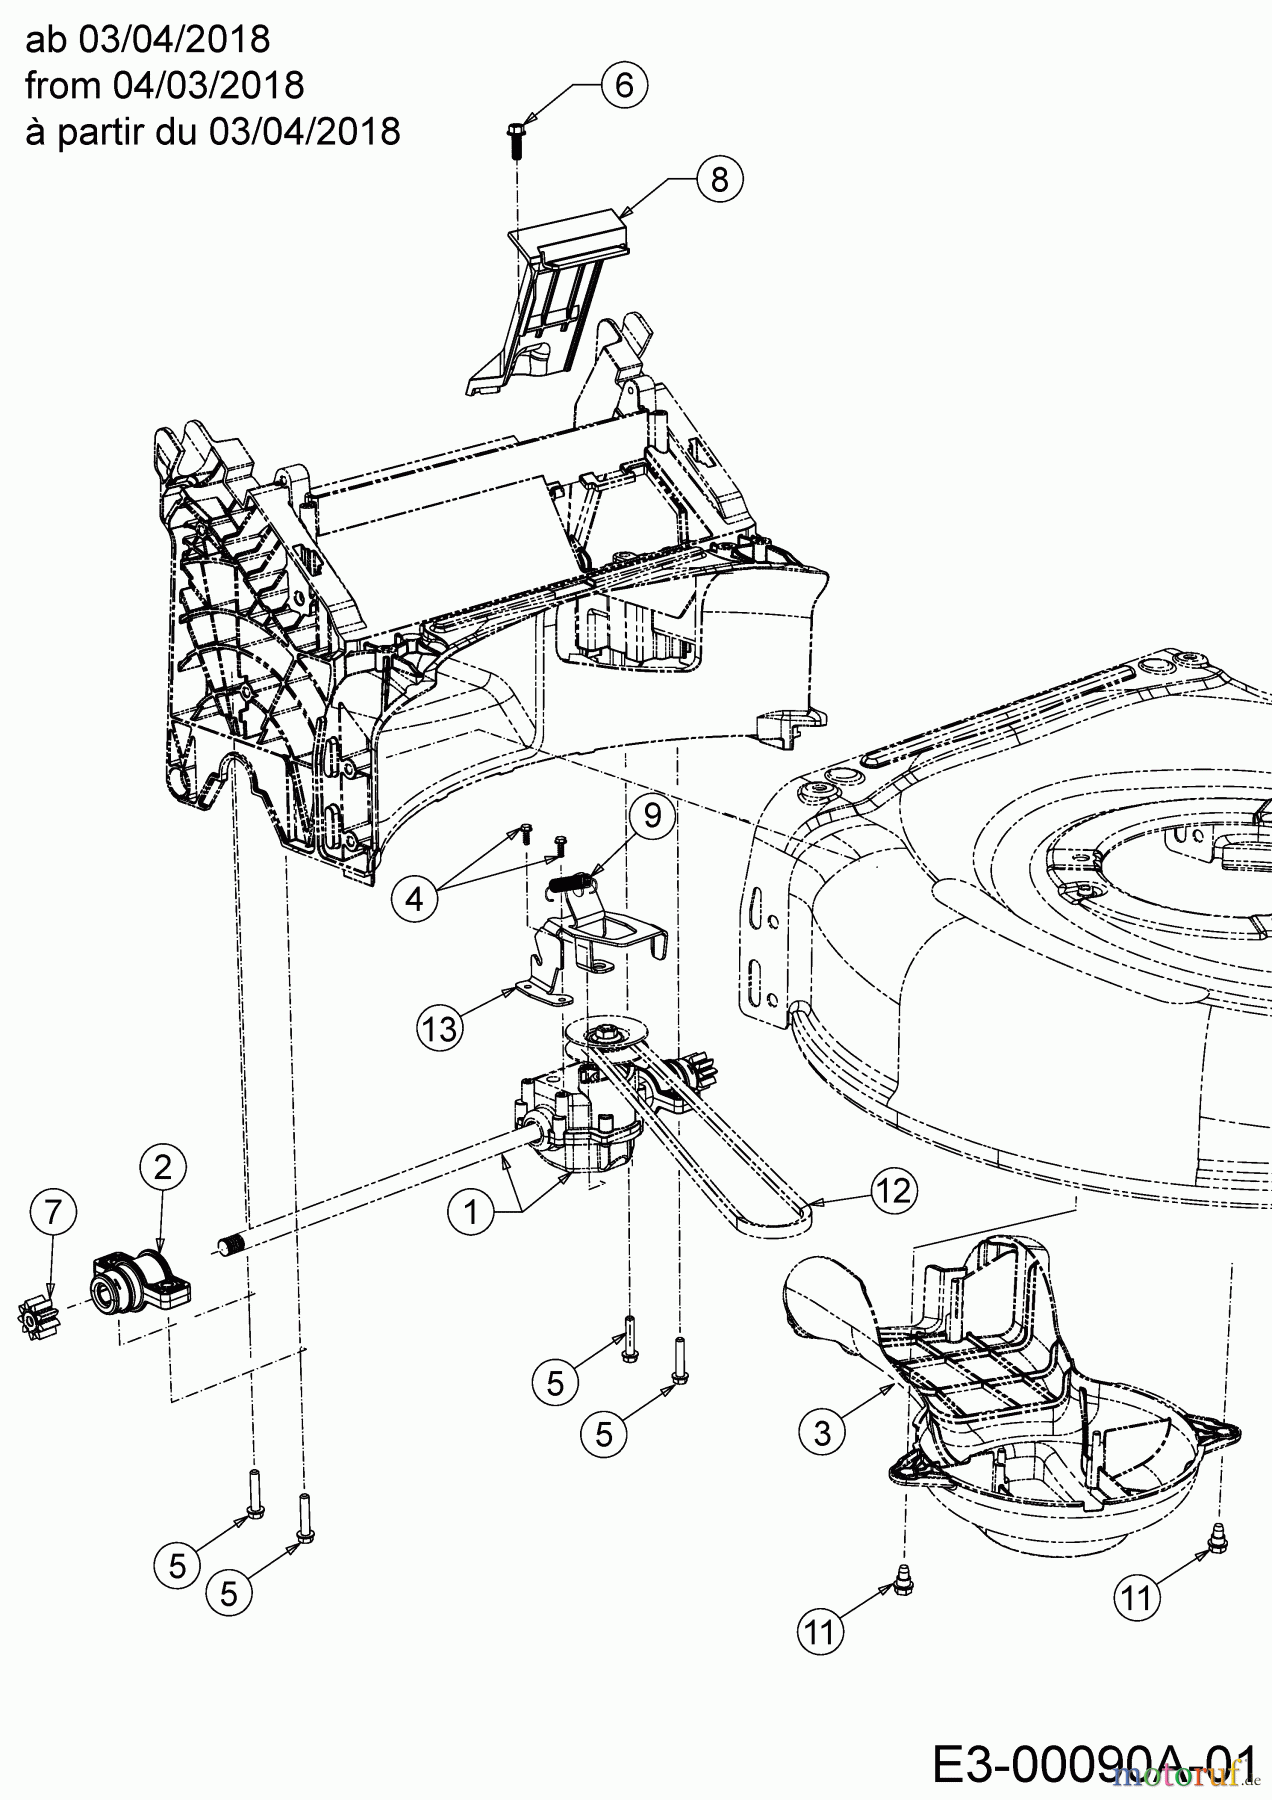  Mr.Gardener Petrol mower self propelled HW 53 BA-2 12B-PN7B629  (2018) Gearbox, Belt from 04/03/2018